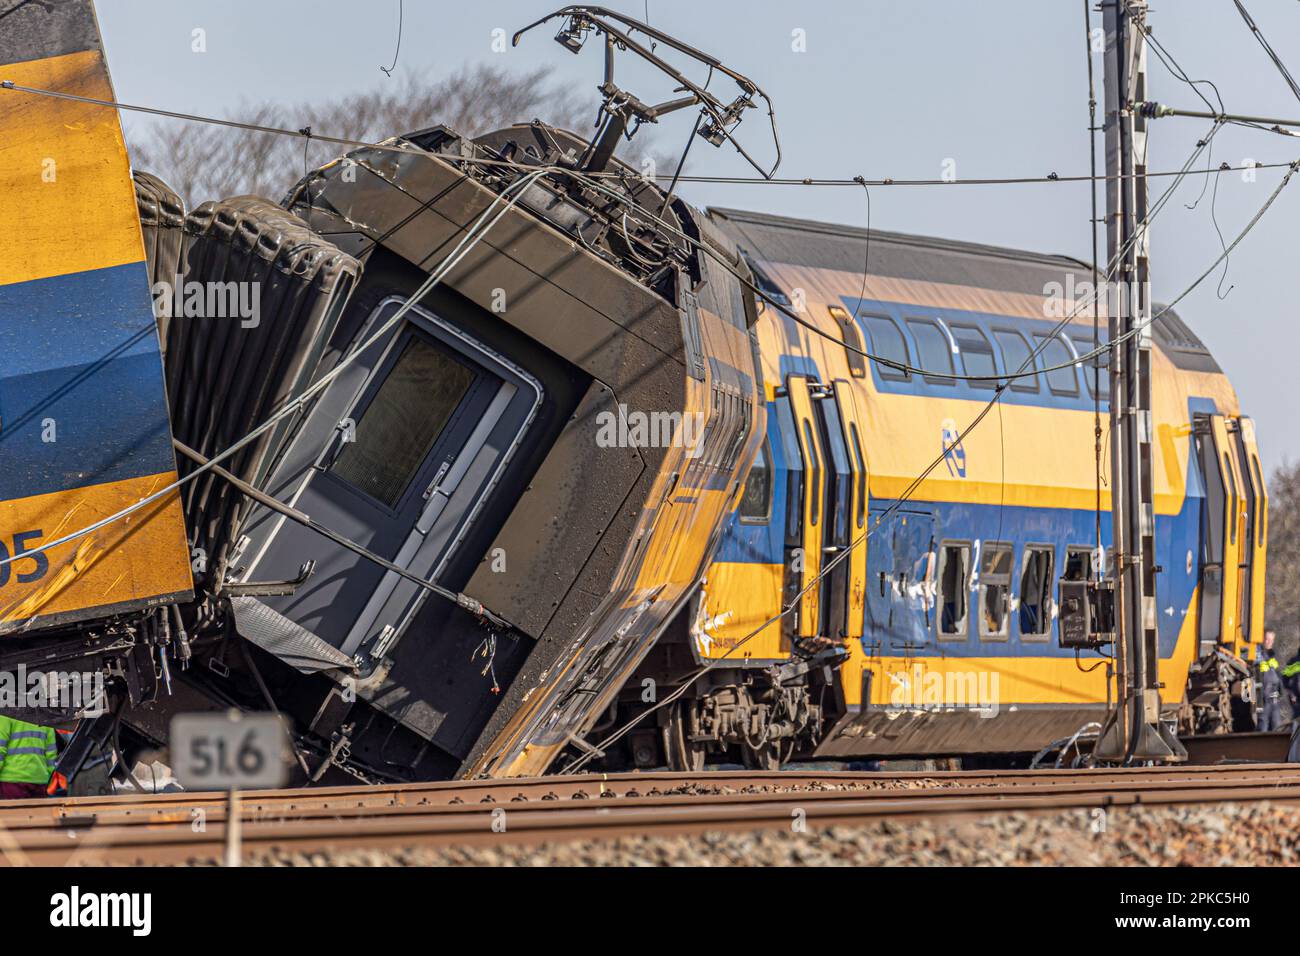 Netherlands train crash: One dead and around 30 people injured